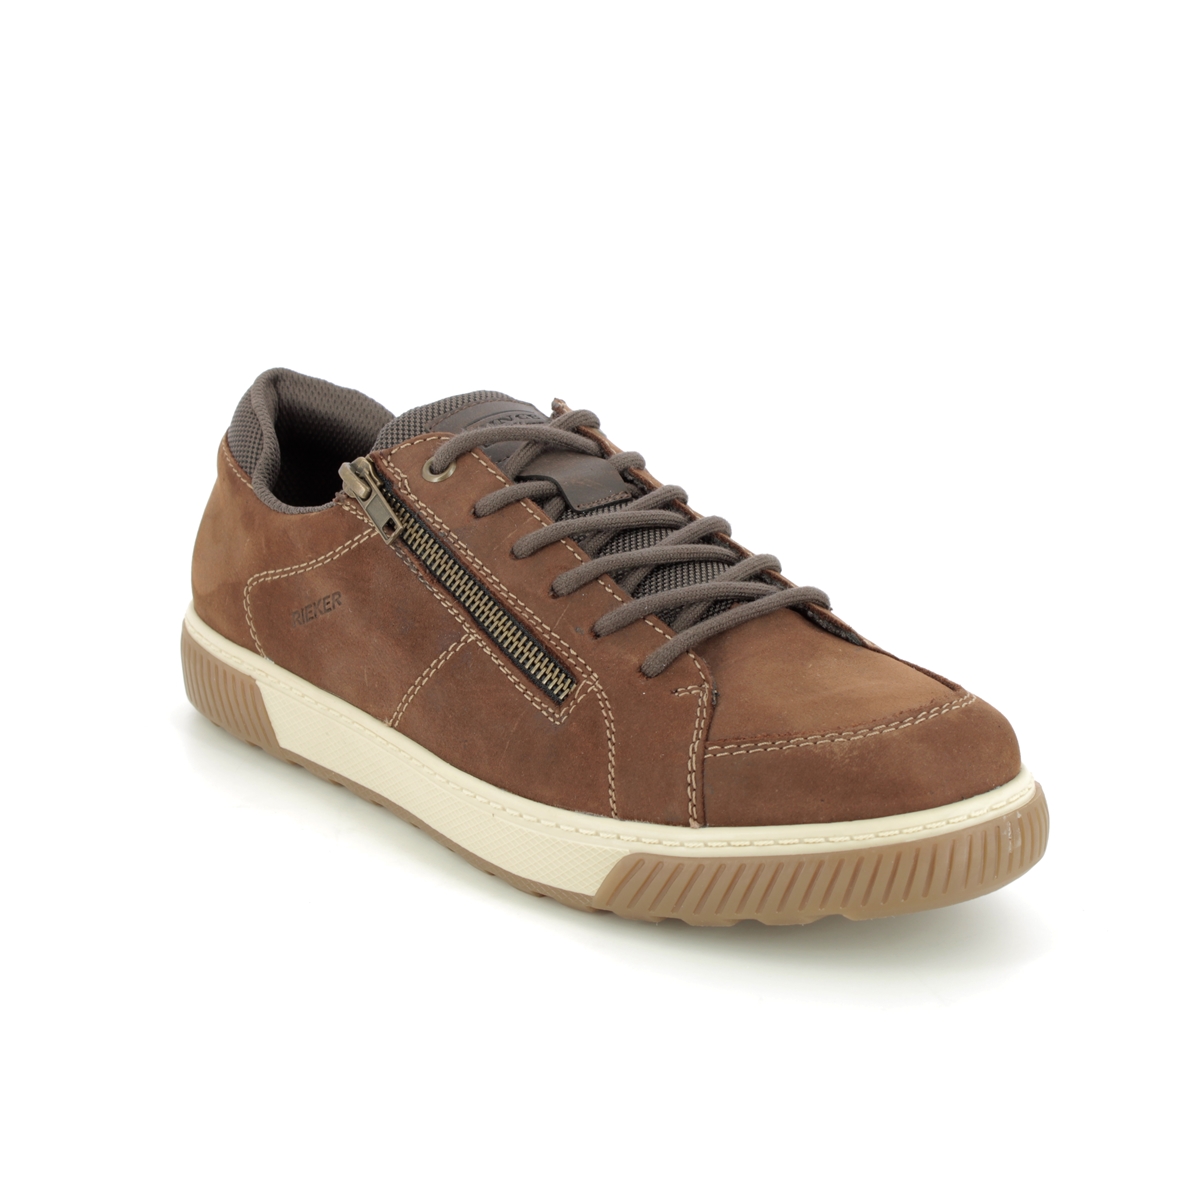 Rieker Urbanzi Tan Suede Mens Comfort Shoes 18910-22 In Size 44 In Plain Tan Suede